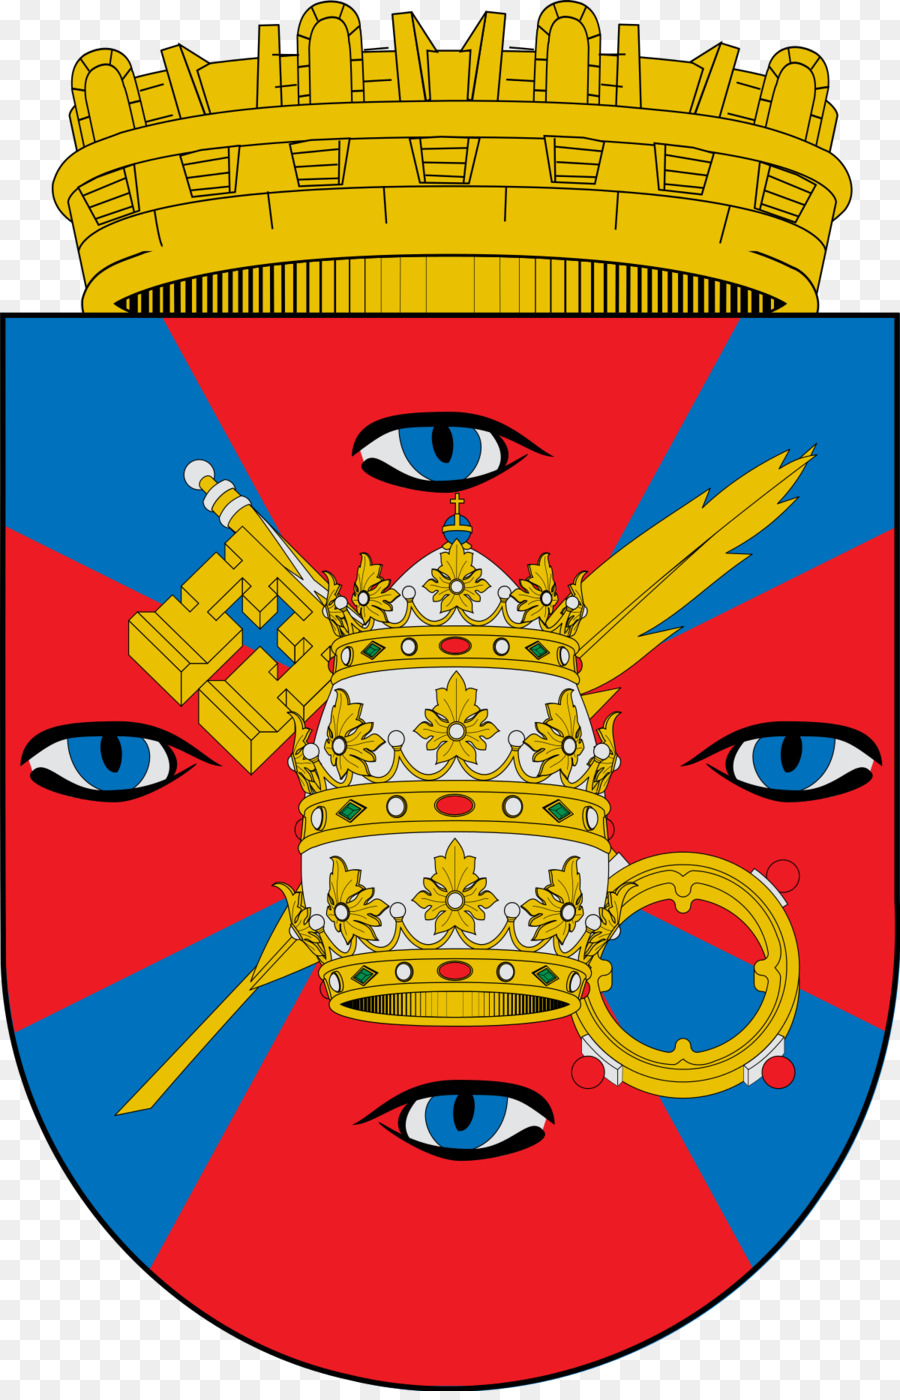 San Fabian Frei in San Pedro de la Paz Wappen der Region Bío Logo - Valentinstag